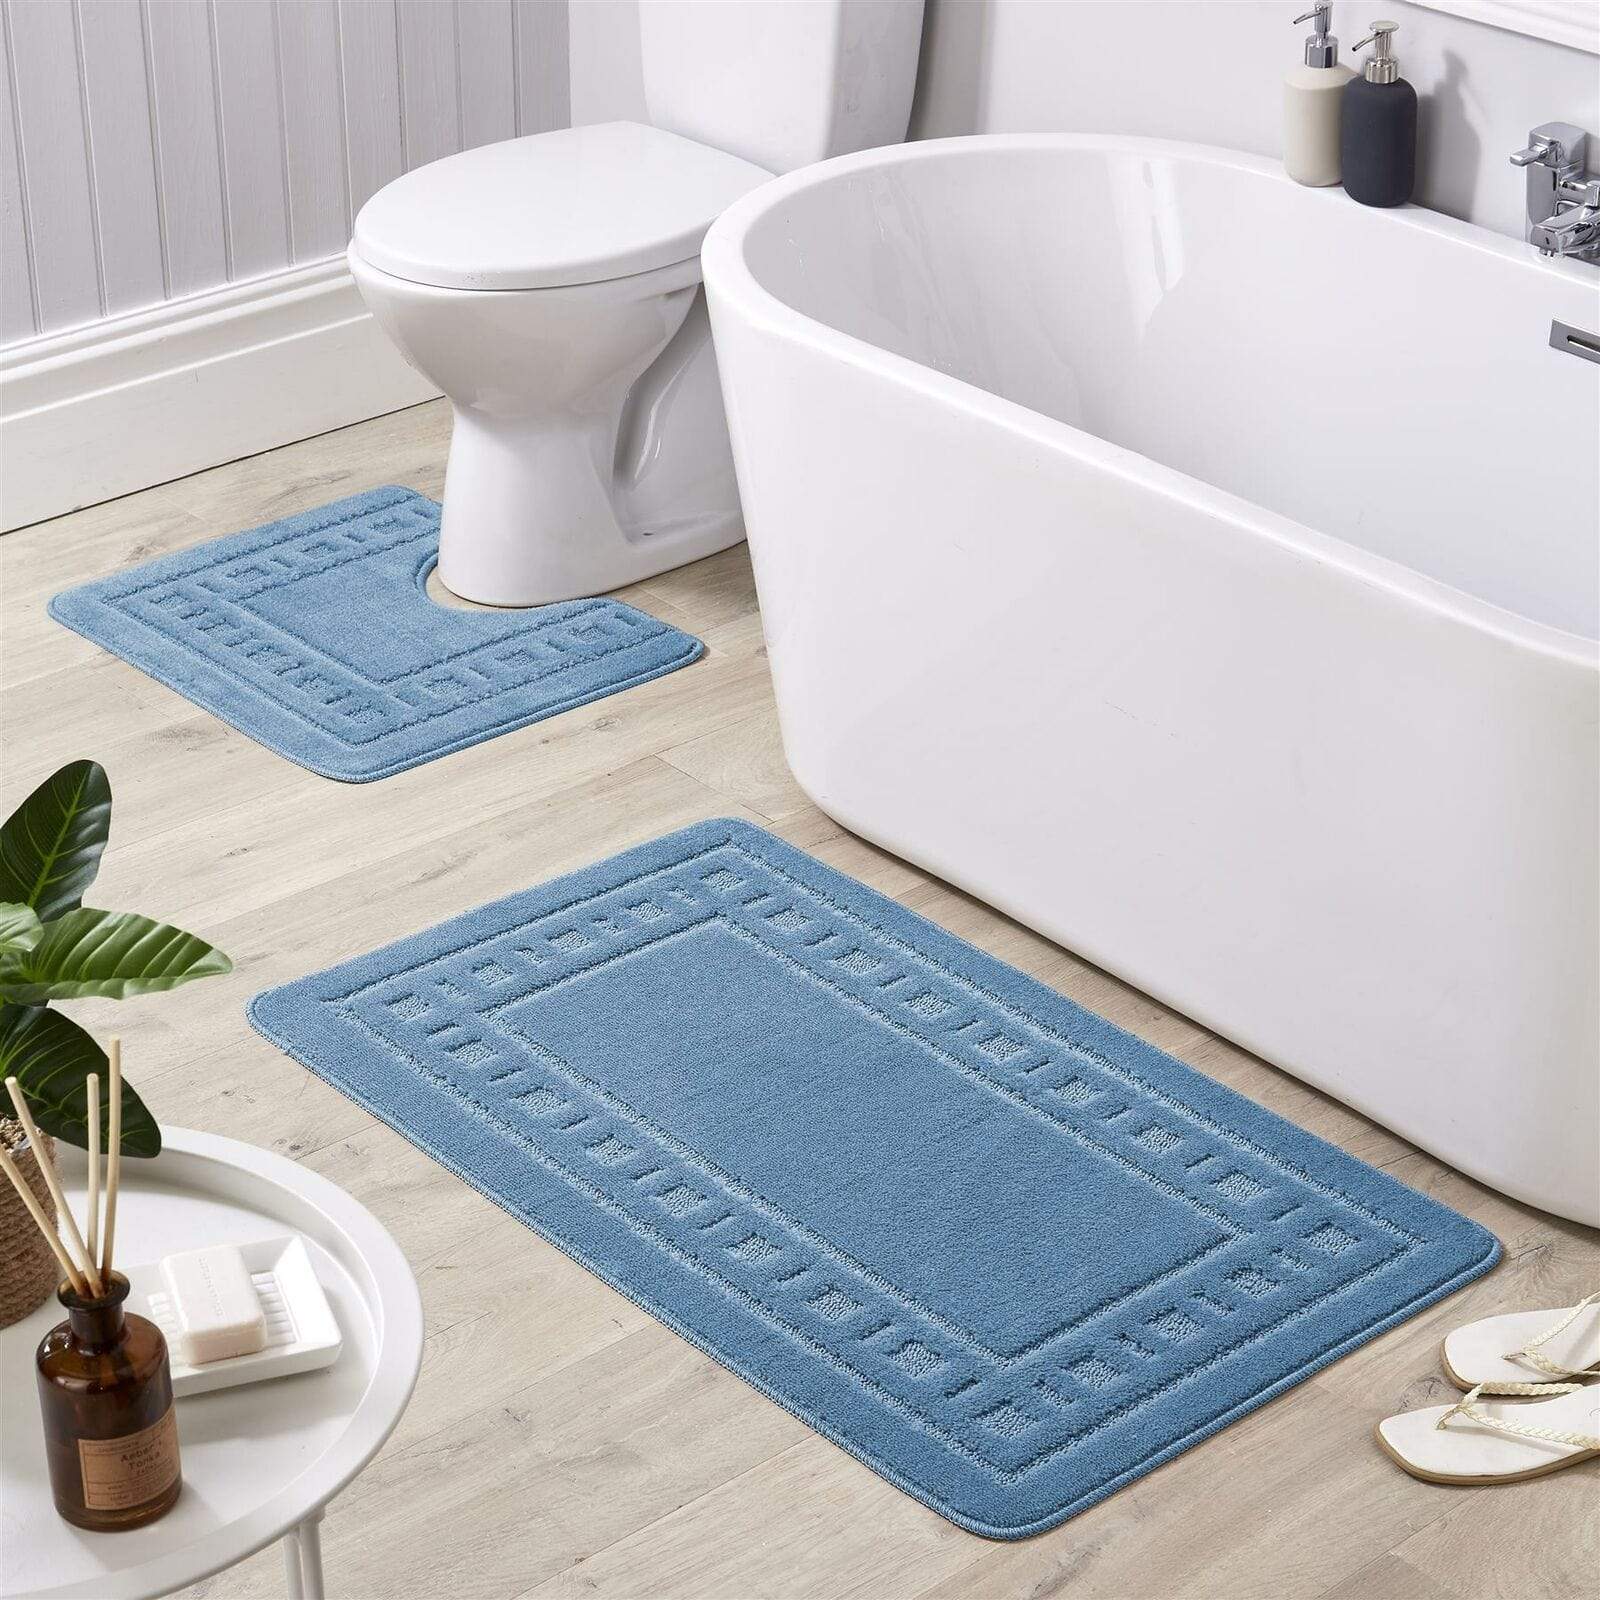 Blue Sexy Body Bath Mat 15.7″x23.6″or 40x60 cm, Fun Bathroom Mat